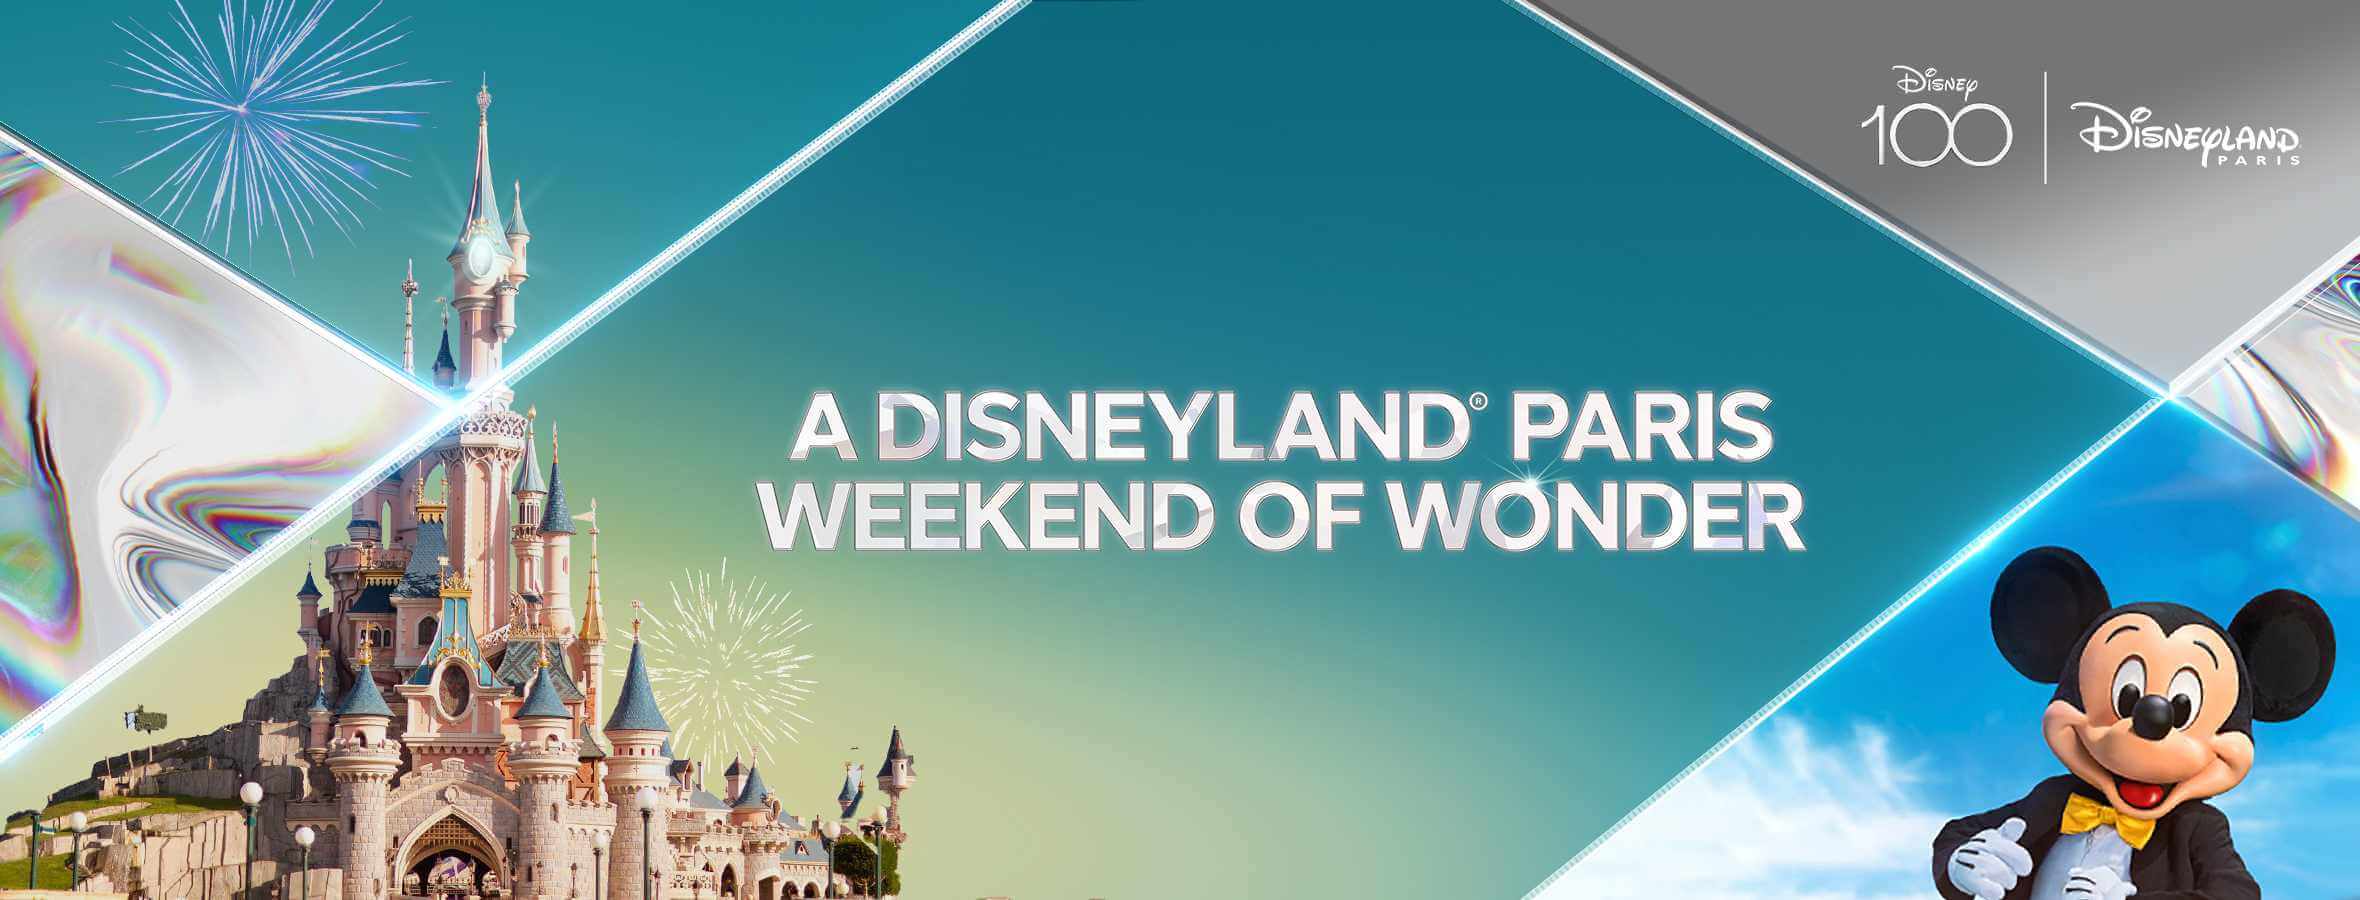 ASDA Disneyland Competition: Win a Disneyland Paris experience